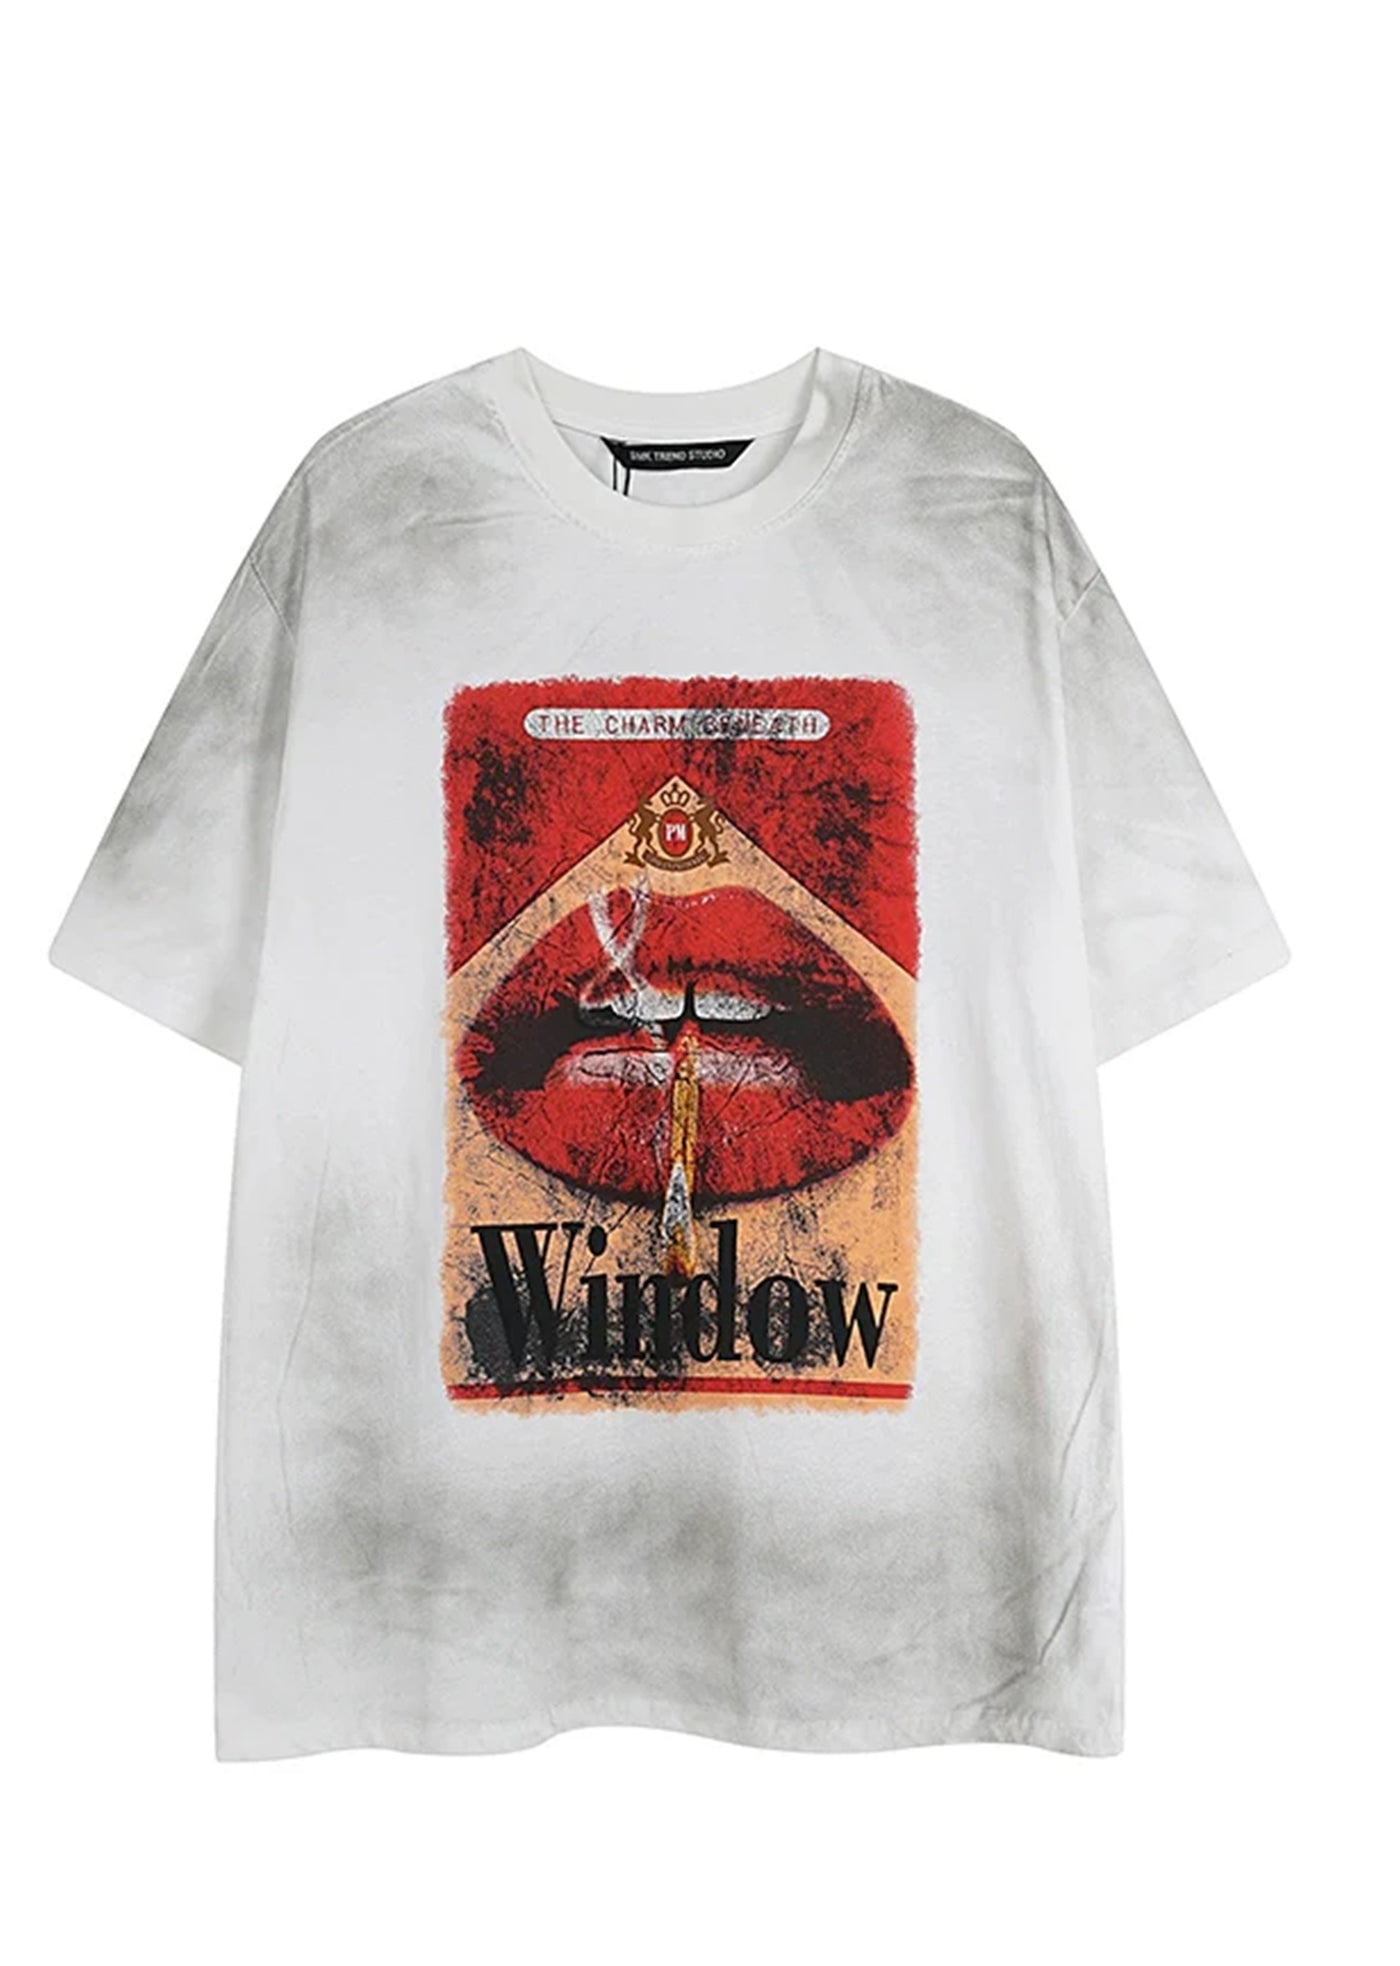 【MR nearly】Smoky grunge illustration design vintage short sleeve T-shirt  MR0115